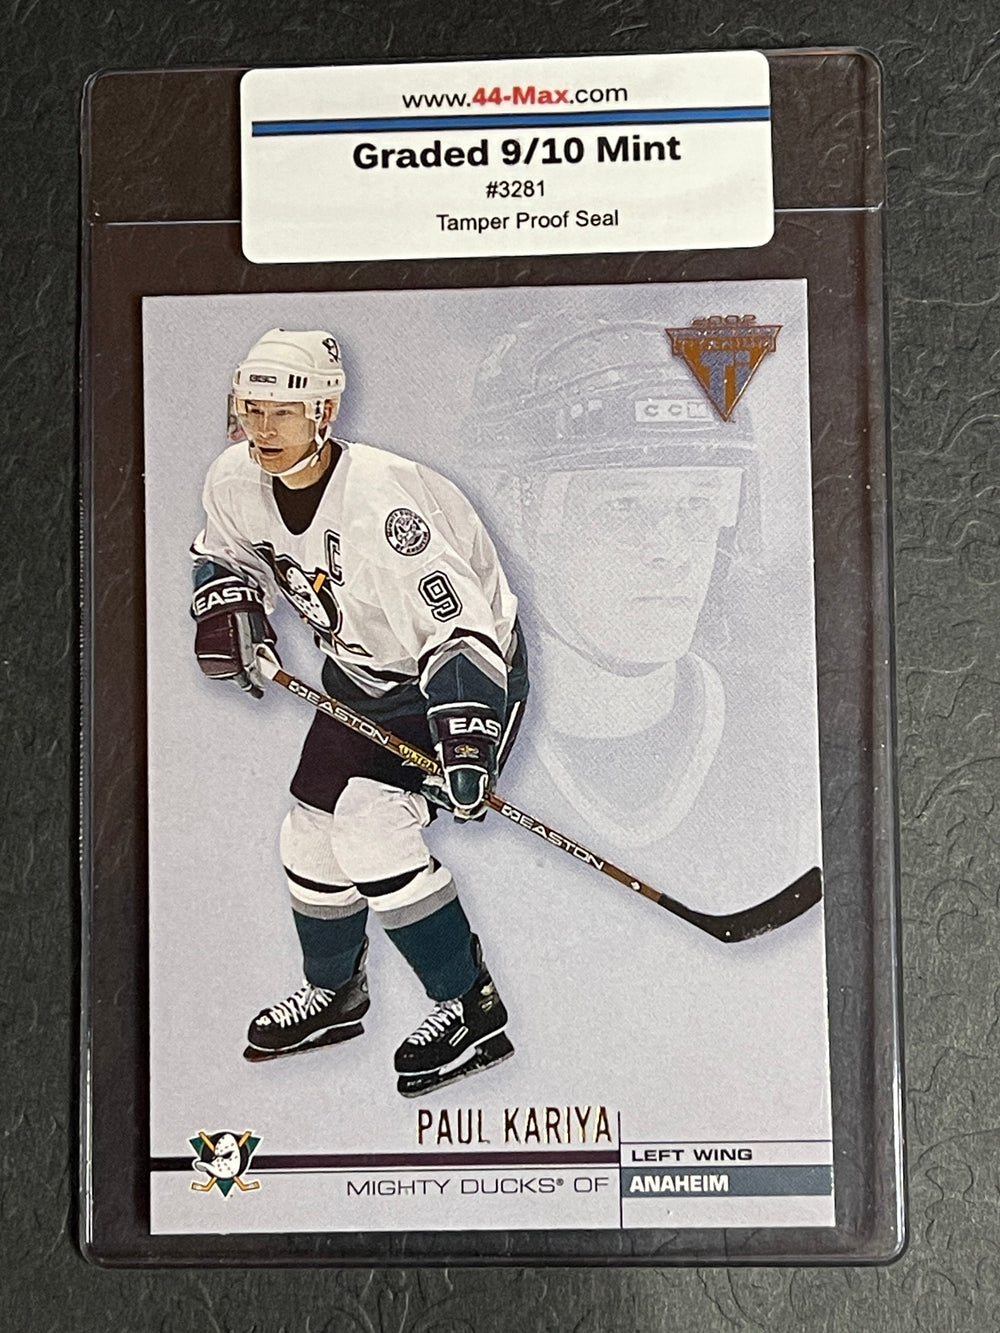 Paul Kariya 2002 Pacific Ducks #3 Card. 44-Max 9/10 Mint #3281